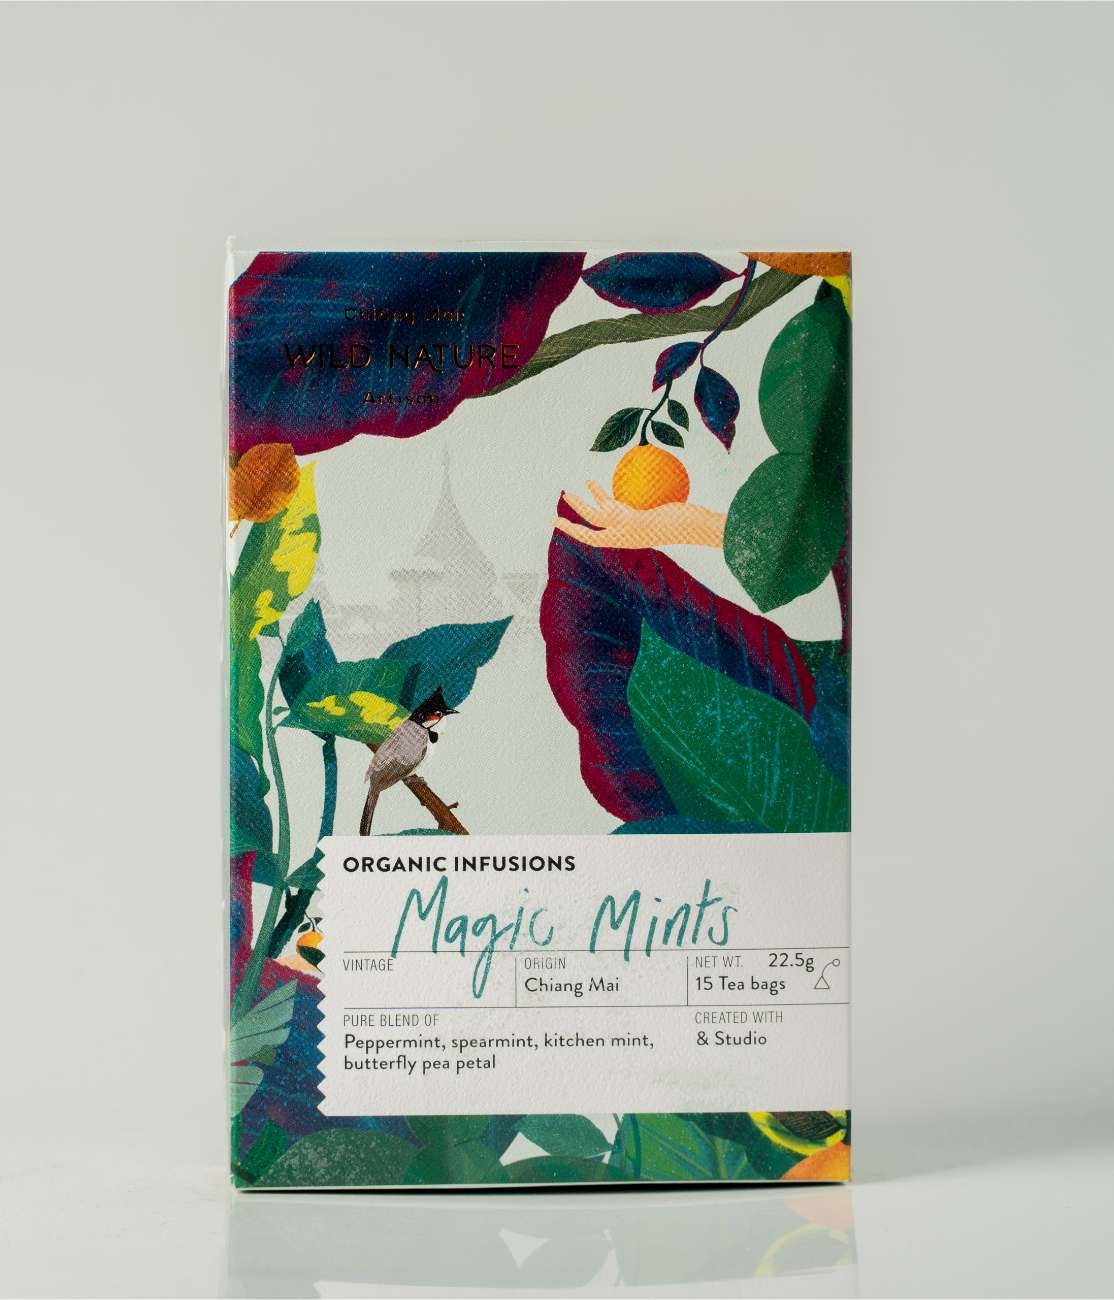 Wild Nature Organic Infusions Magic Mints Tea